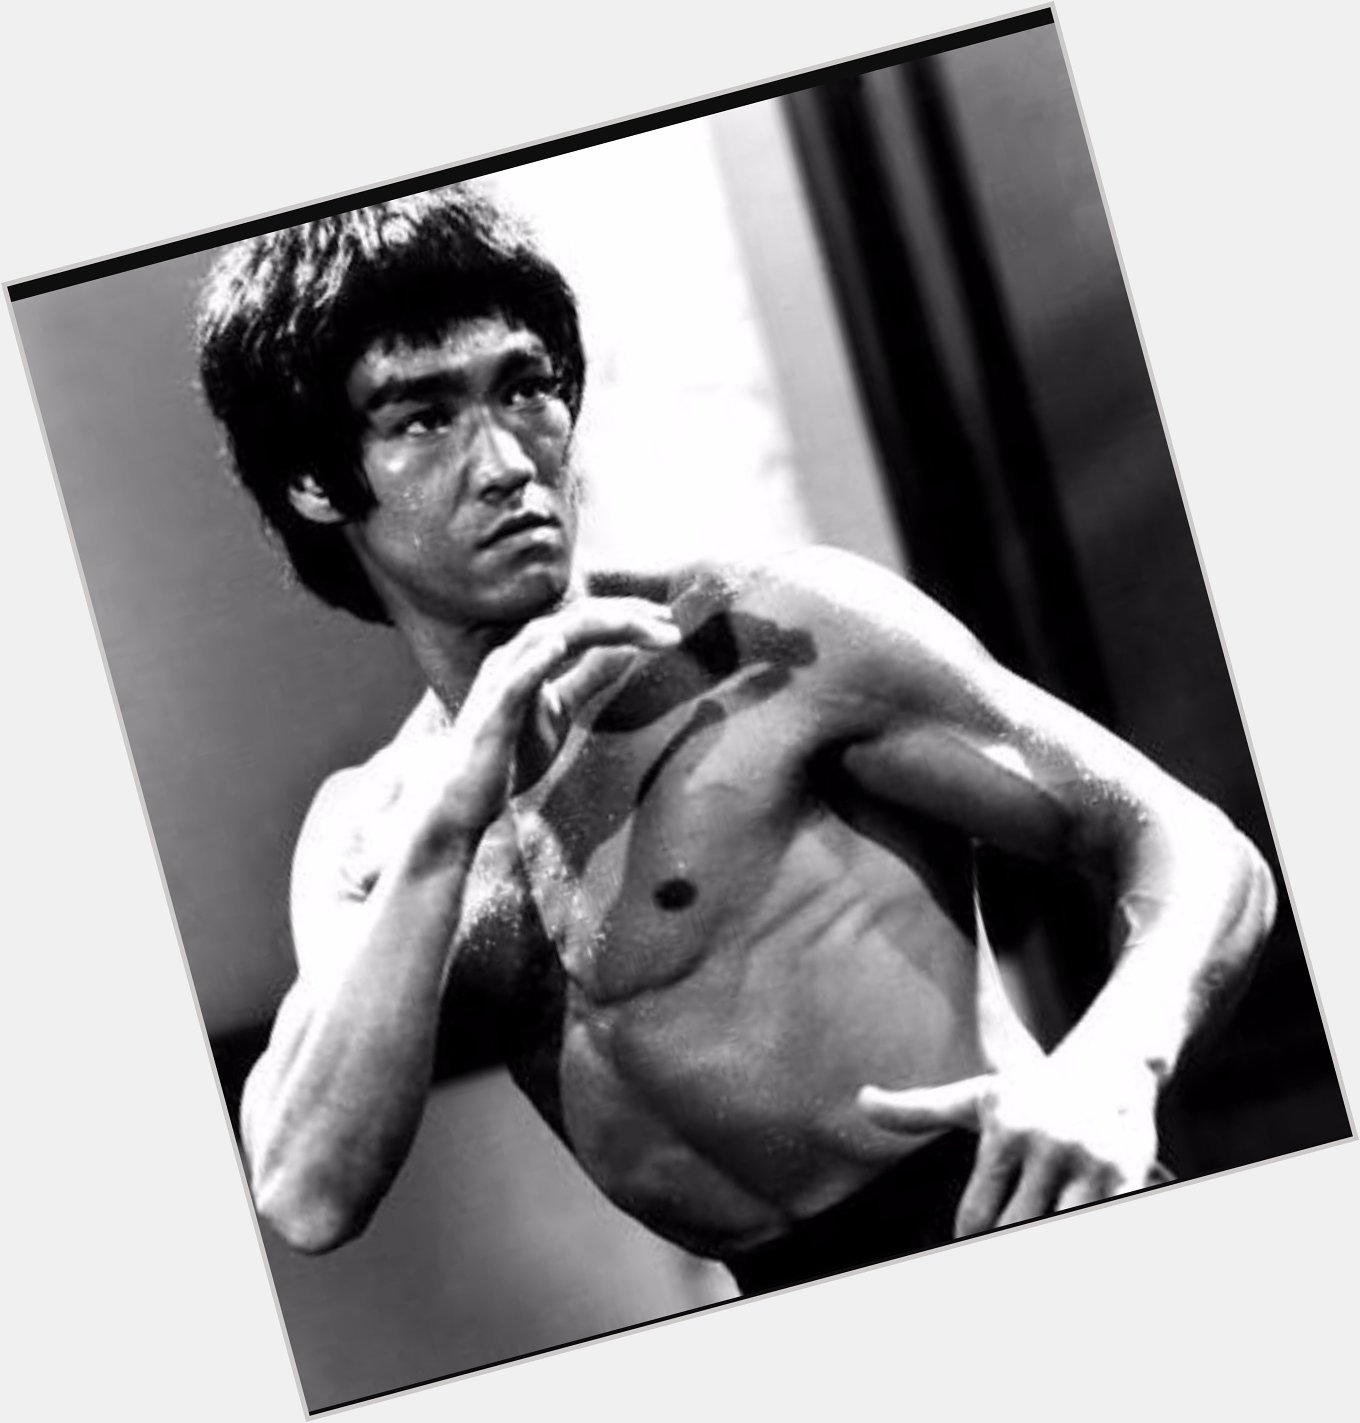 Happy Bday Bruce Lee
Pic1~Bruce Lee Original
Pic2~Bruce Lee Indian Version 